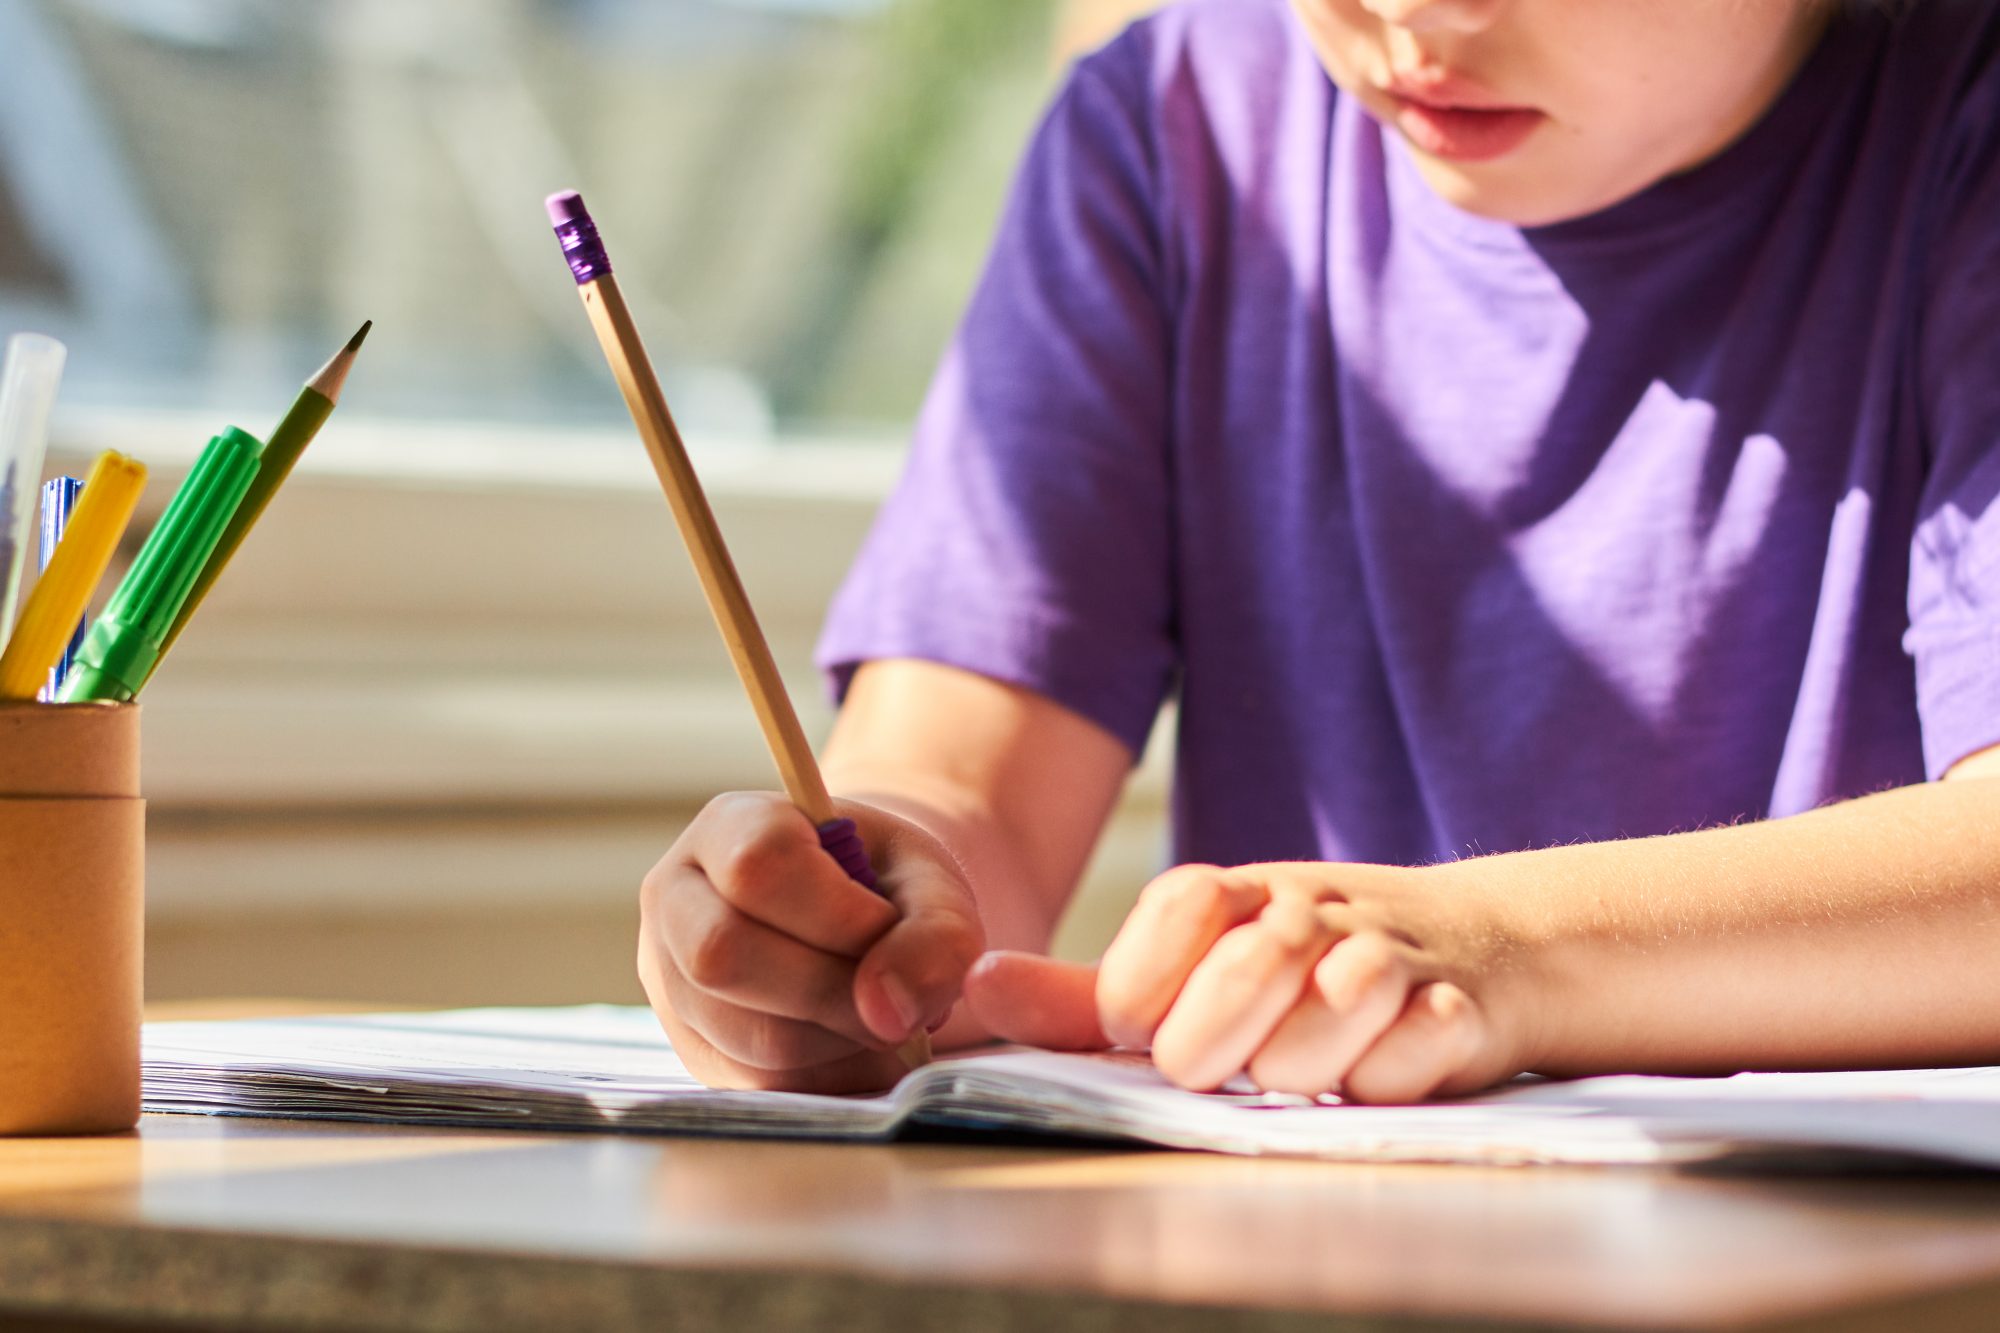 An image of a boy doing school work.